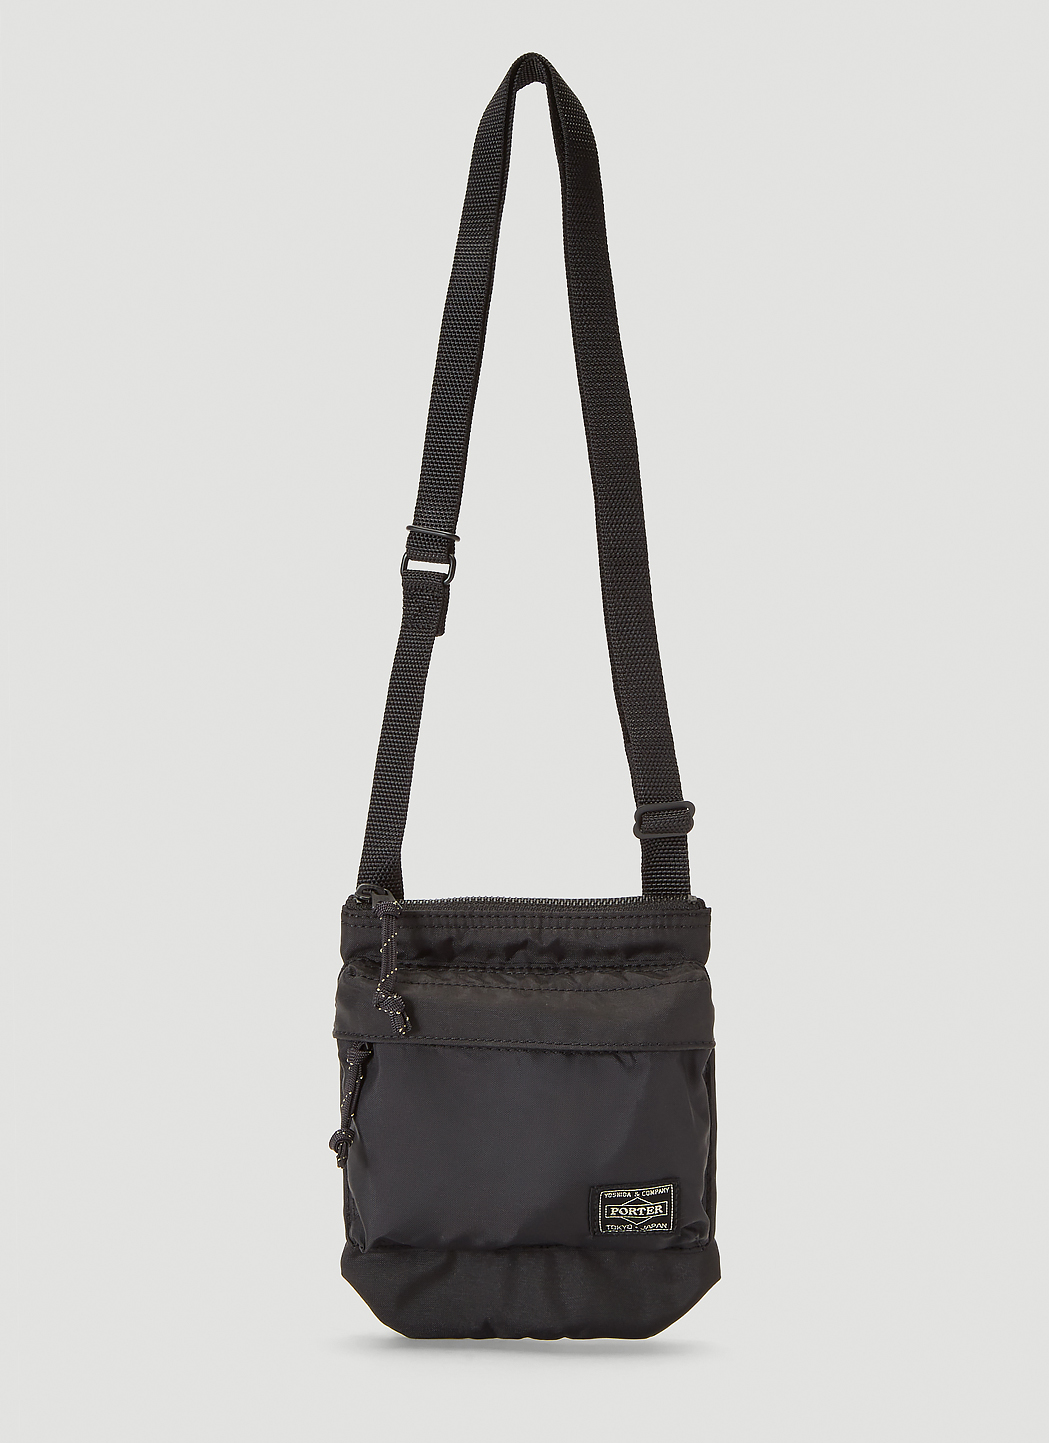 Porter-Yoshida & Co. Unisex Shoulder Pouch Crossbody Bag in Black | LN-CC